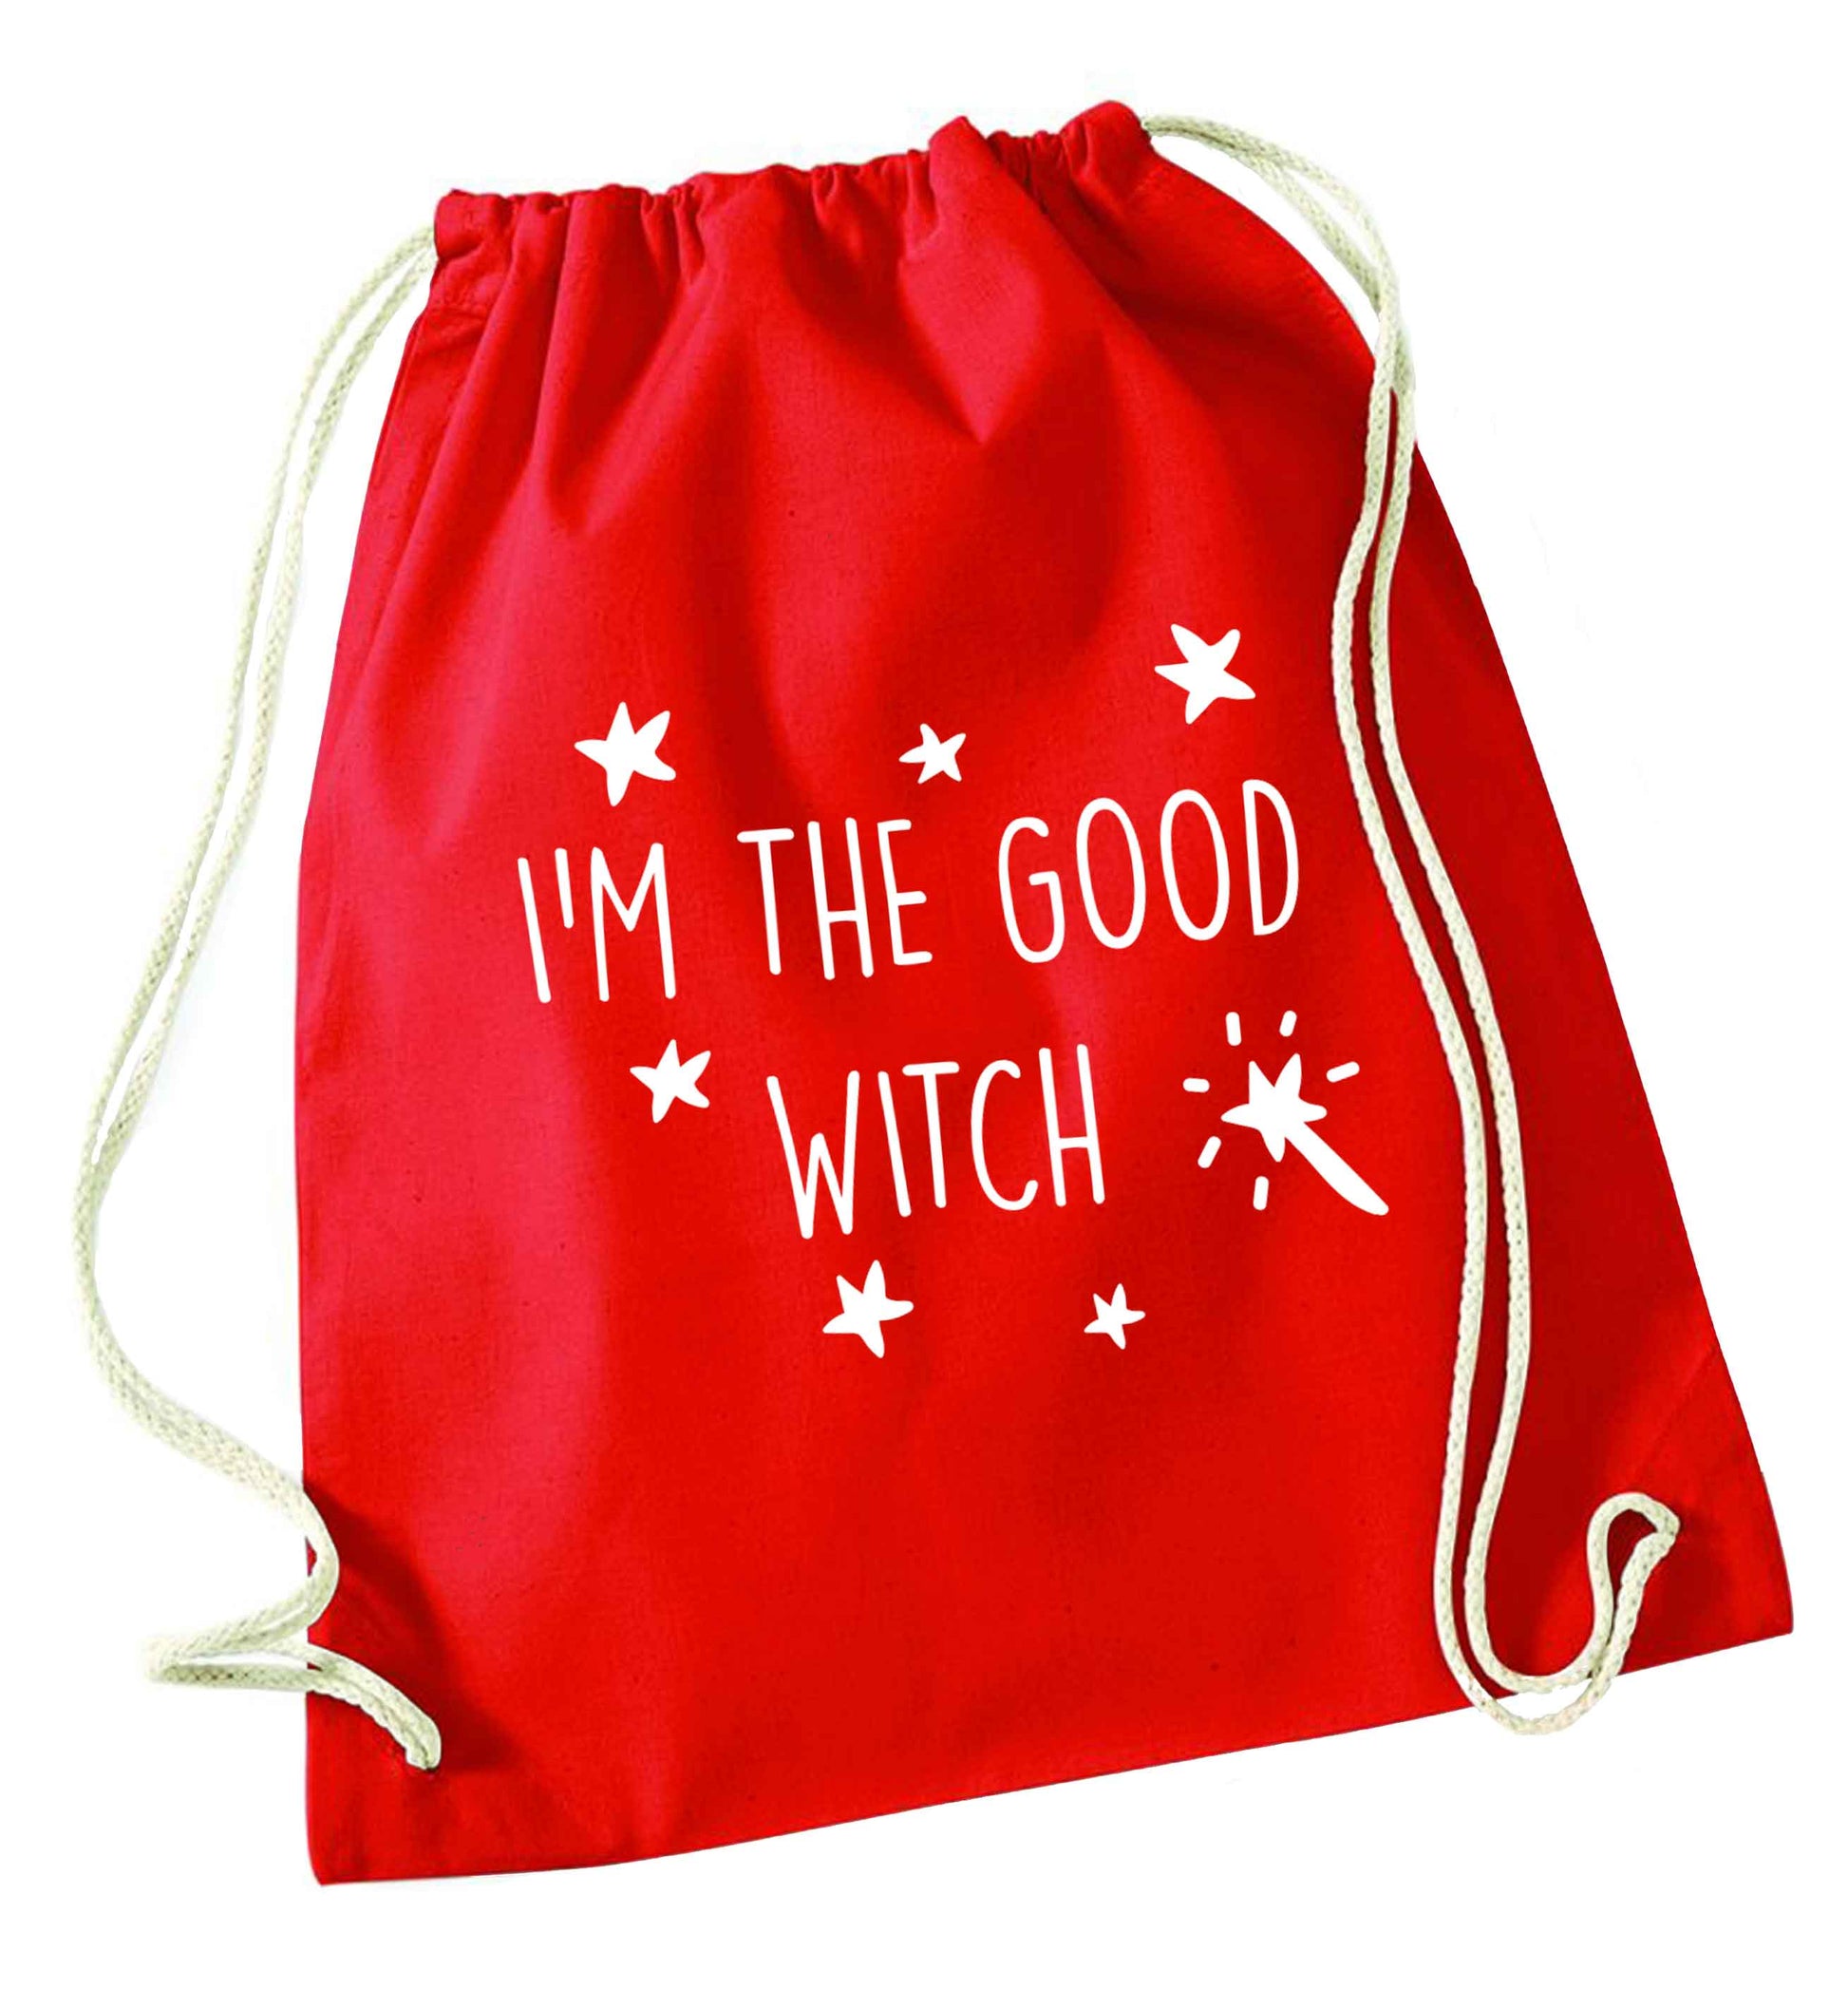 Good witch red drawstring bag 